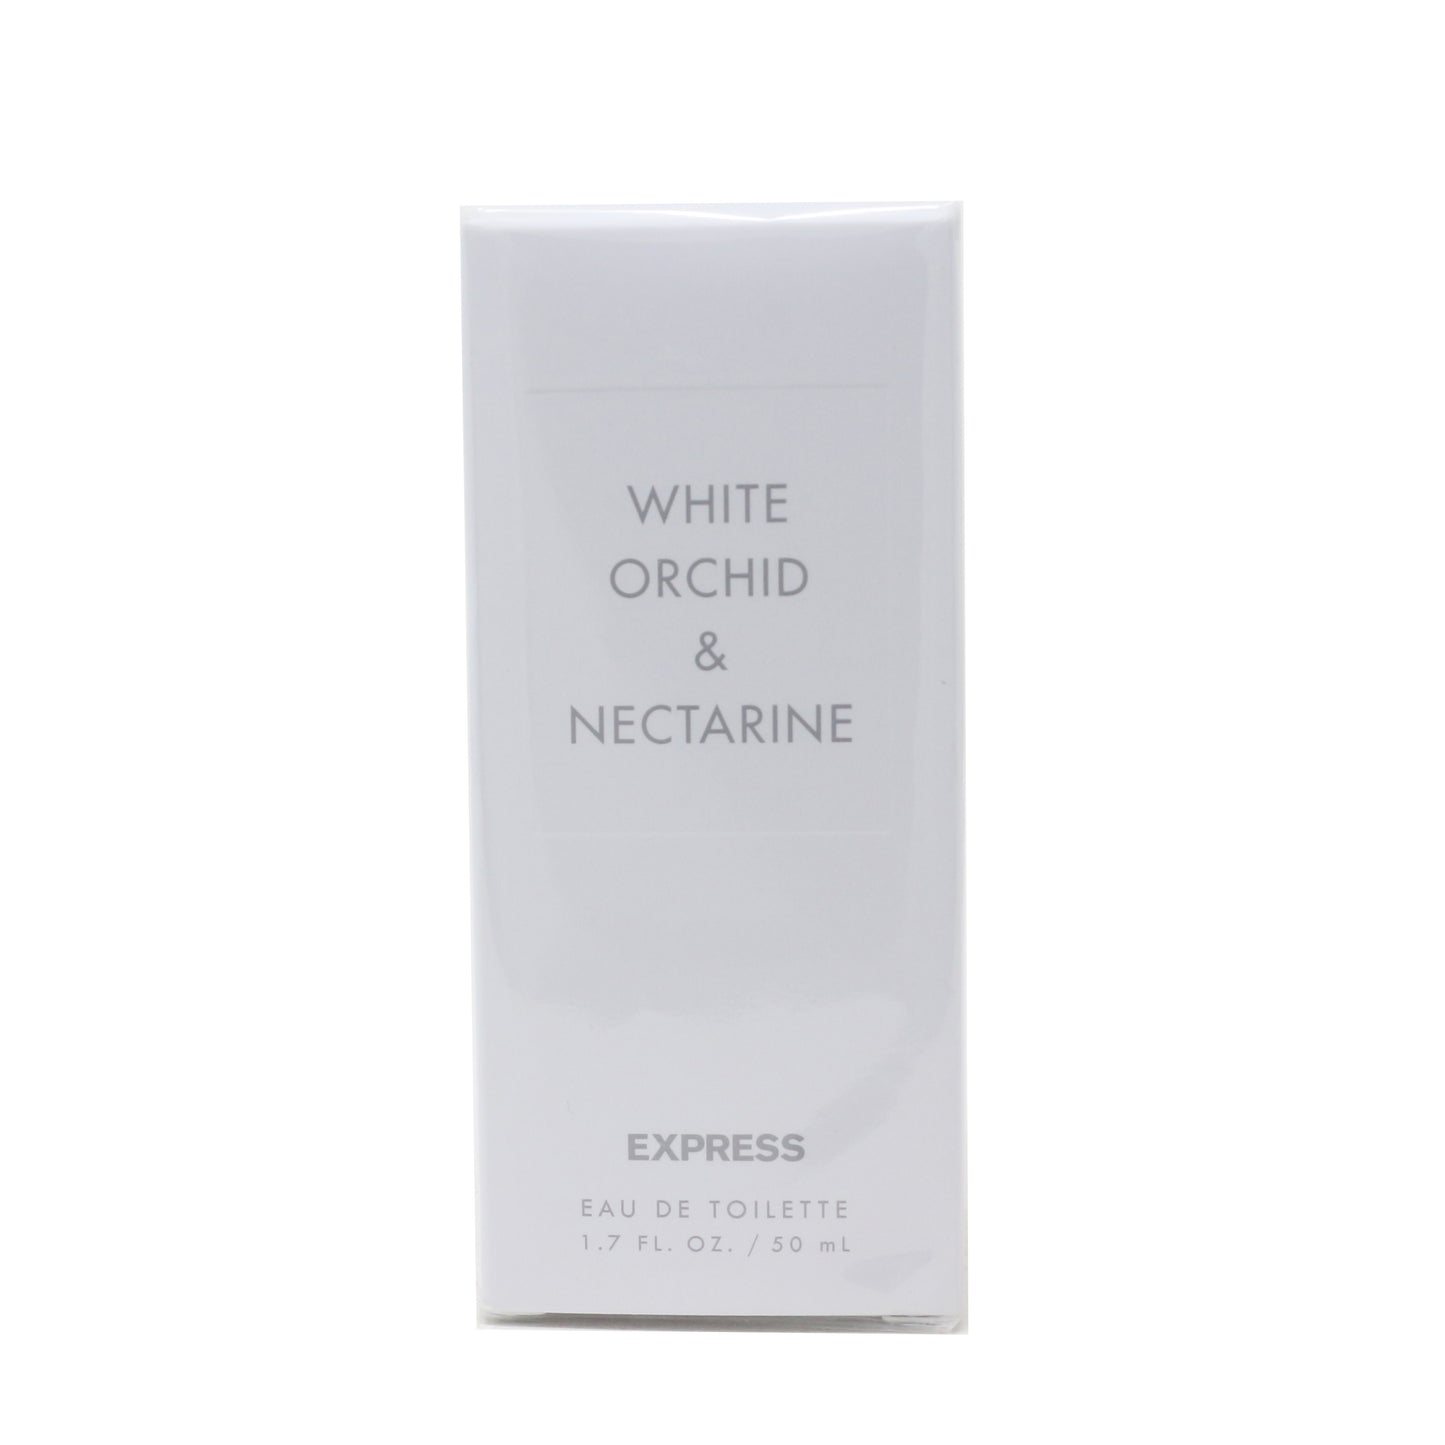 Express White Orchid & Nectarine Eau De Toilette 1.7oz/50ml  New In Box